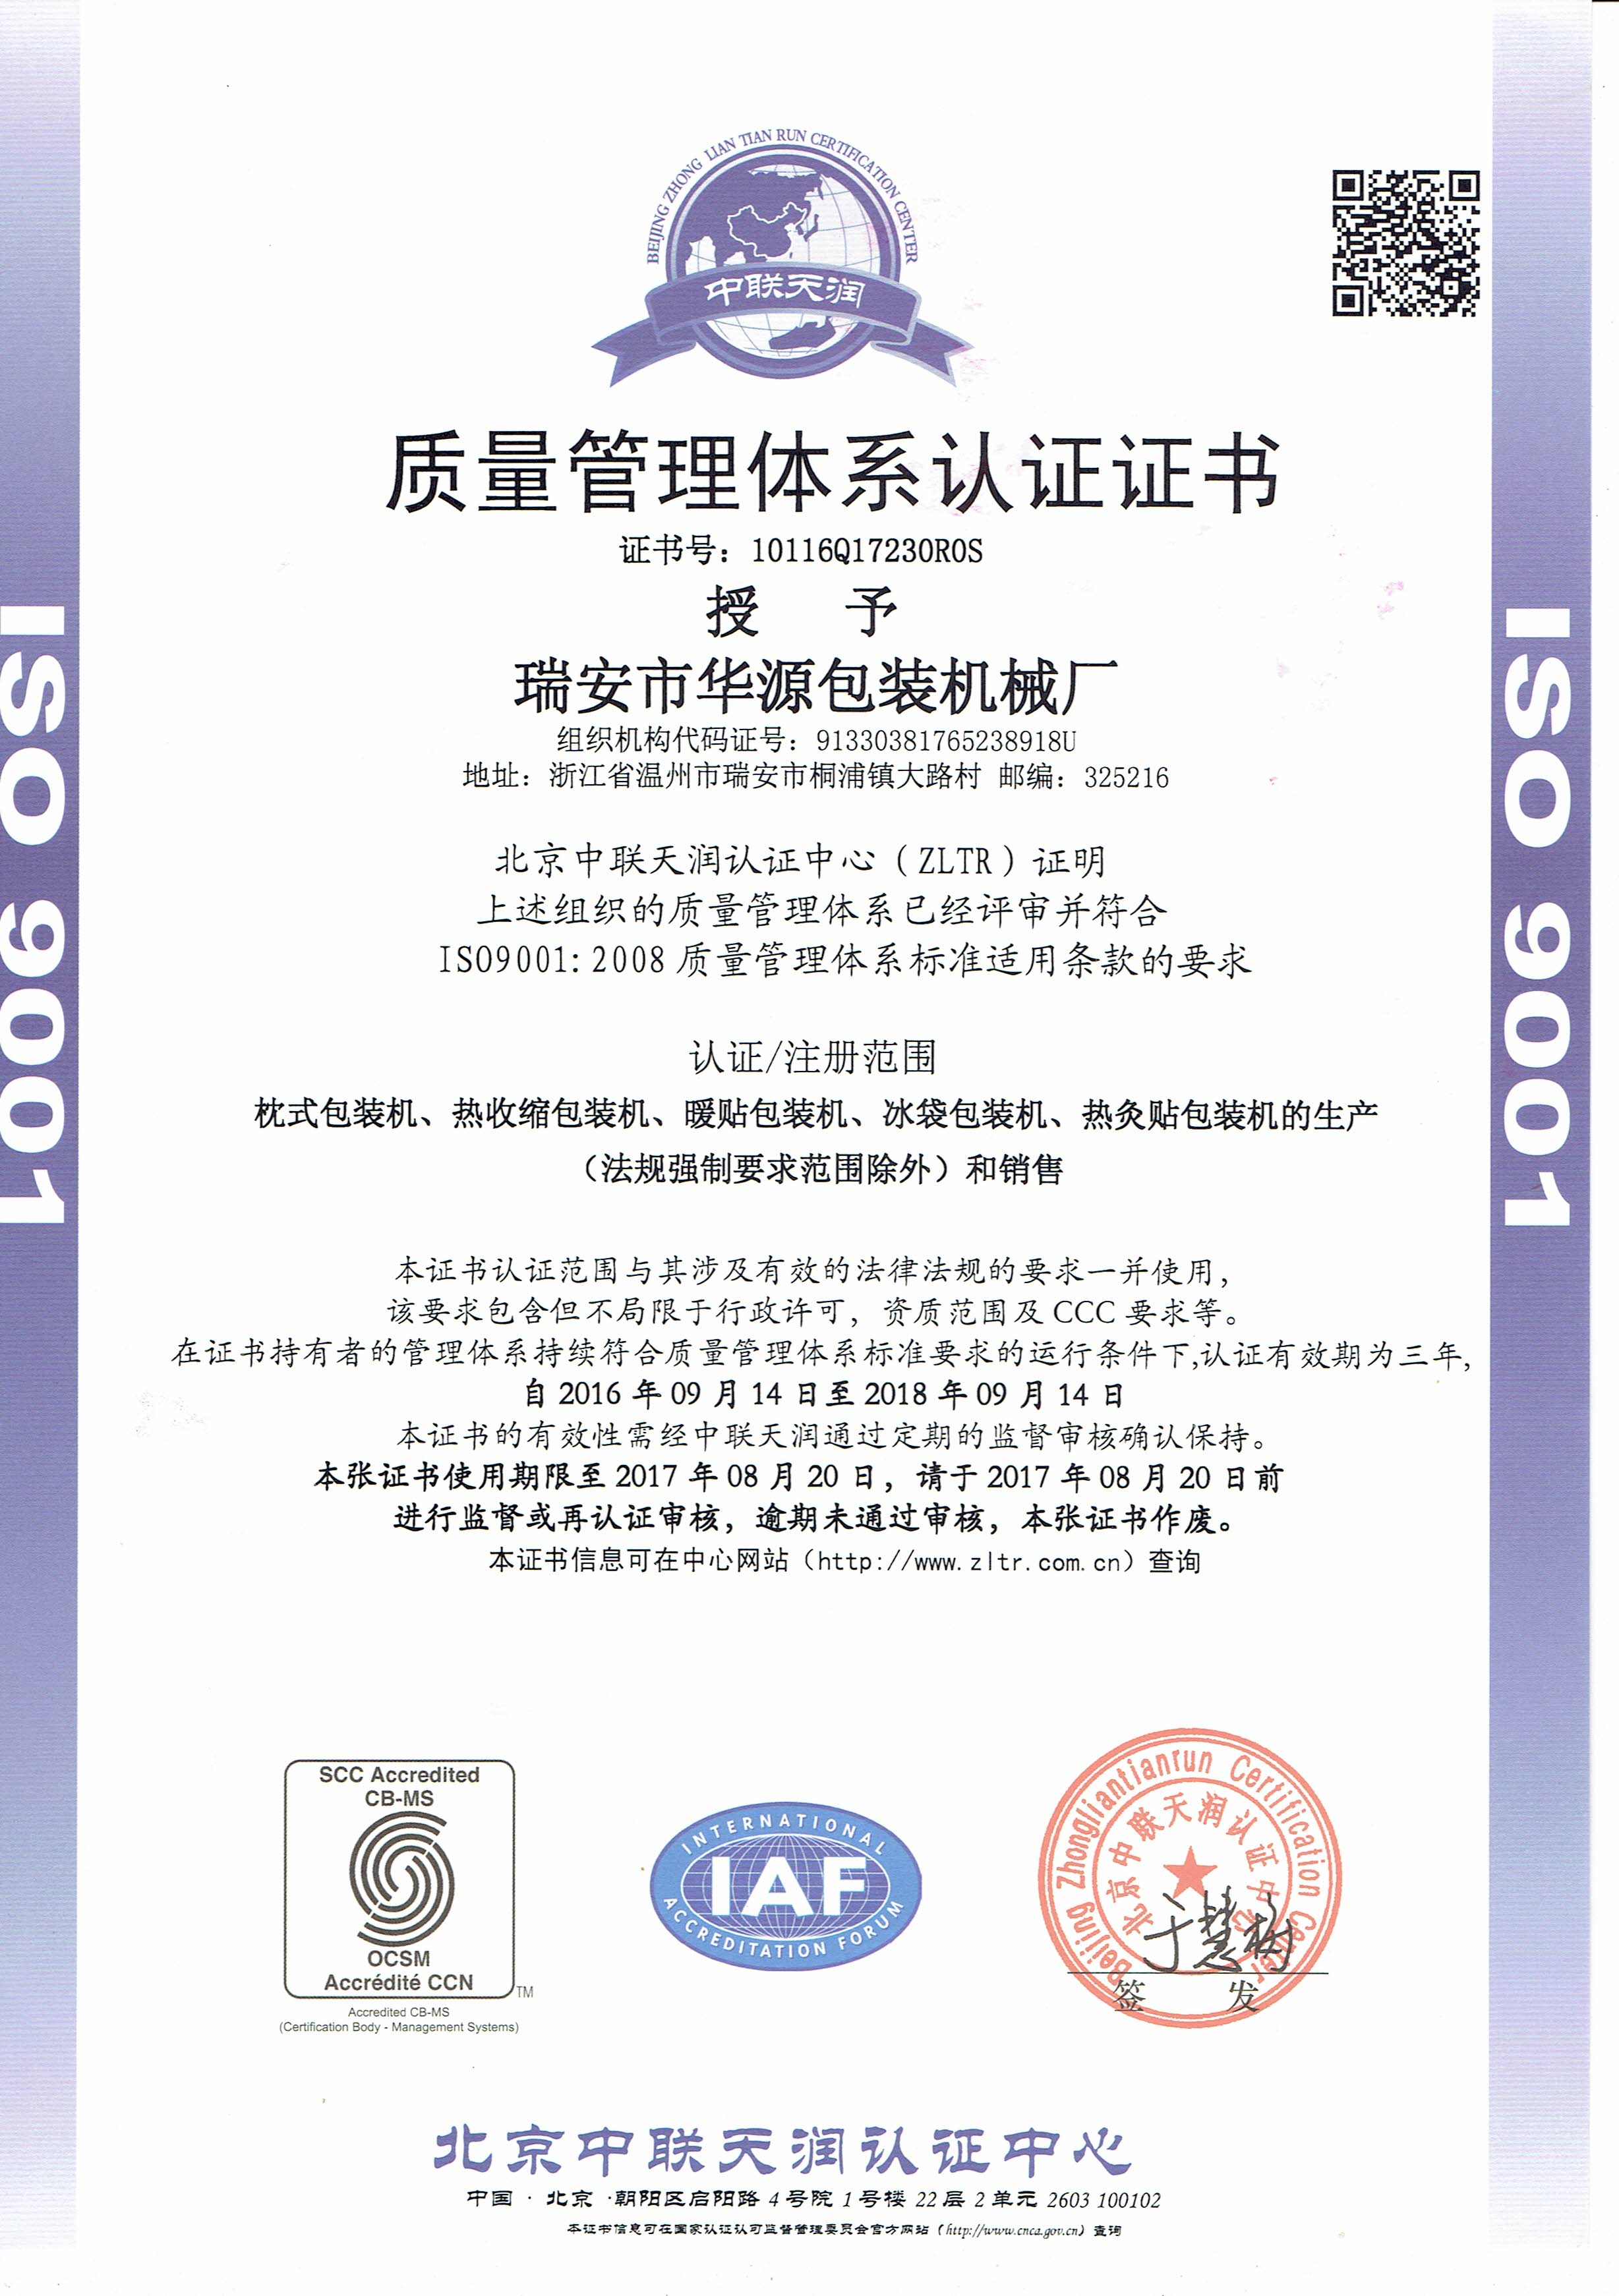 IS9001-2008质量体系认证